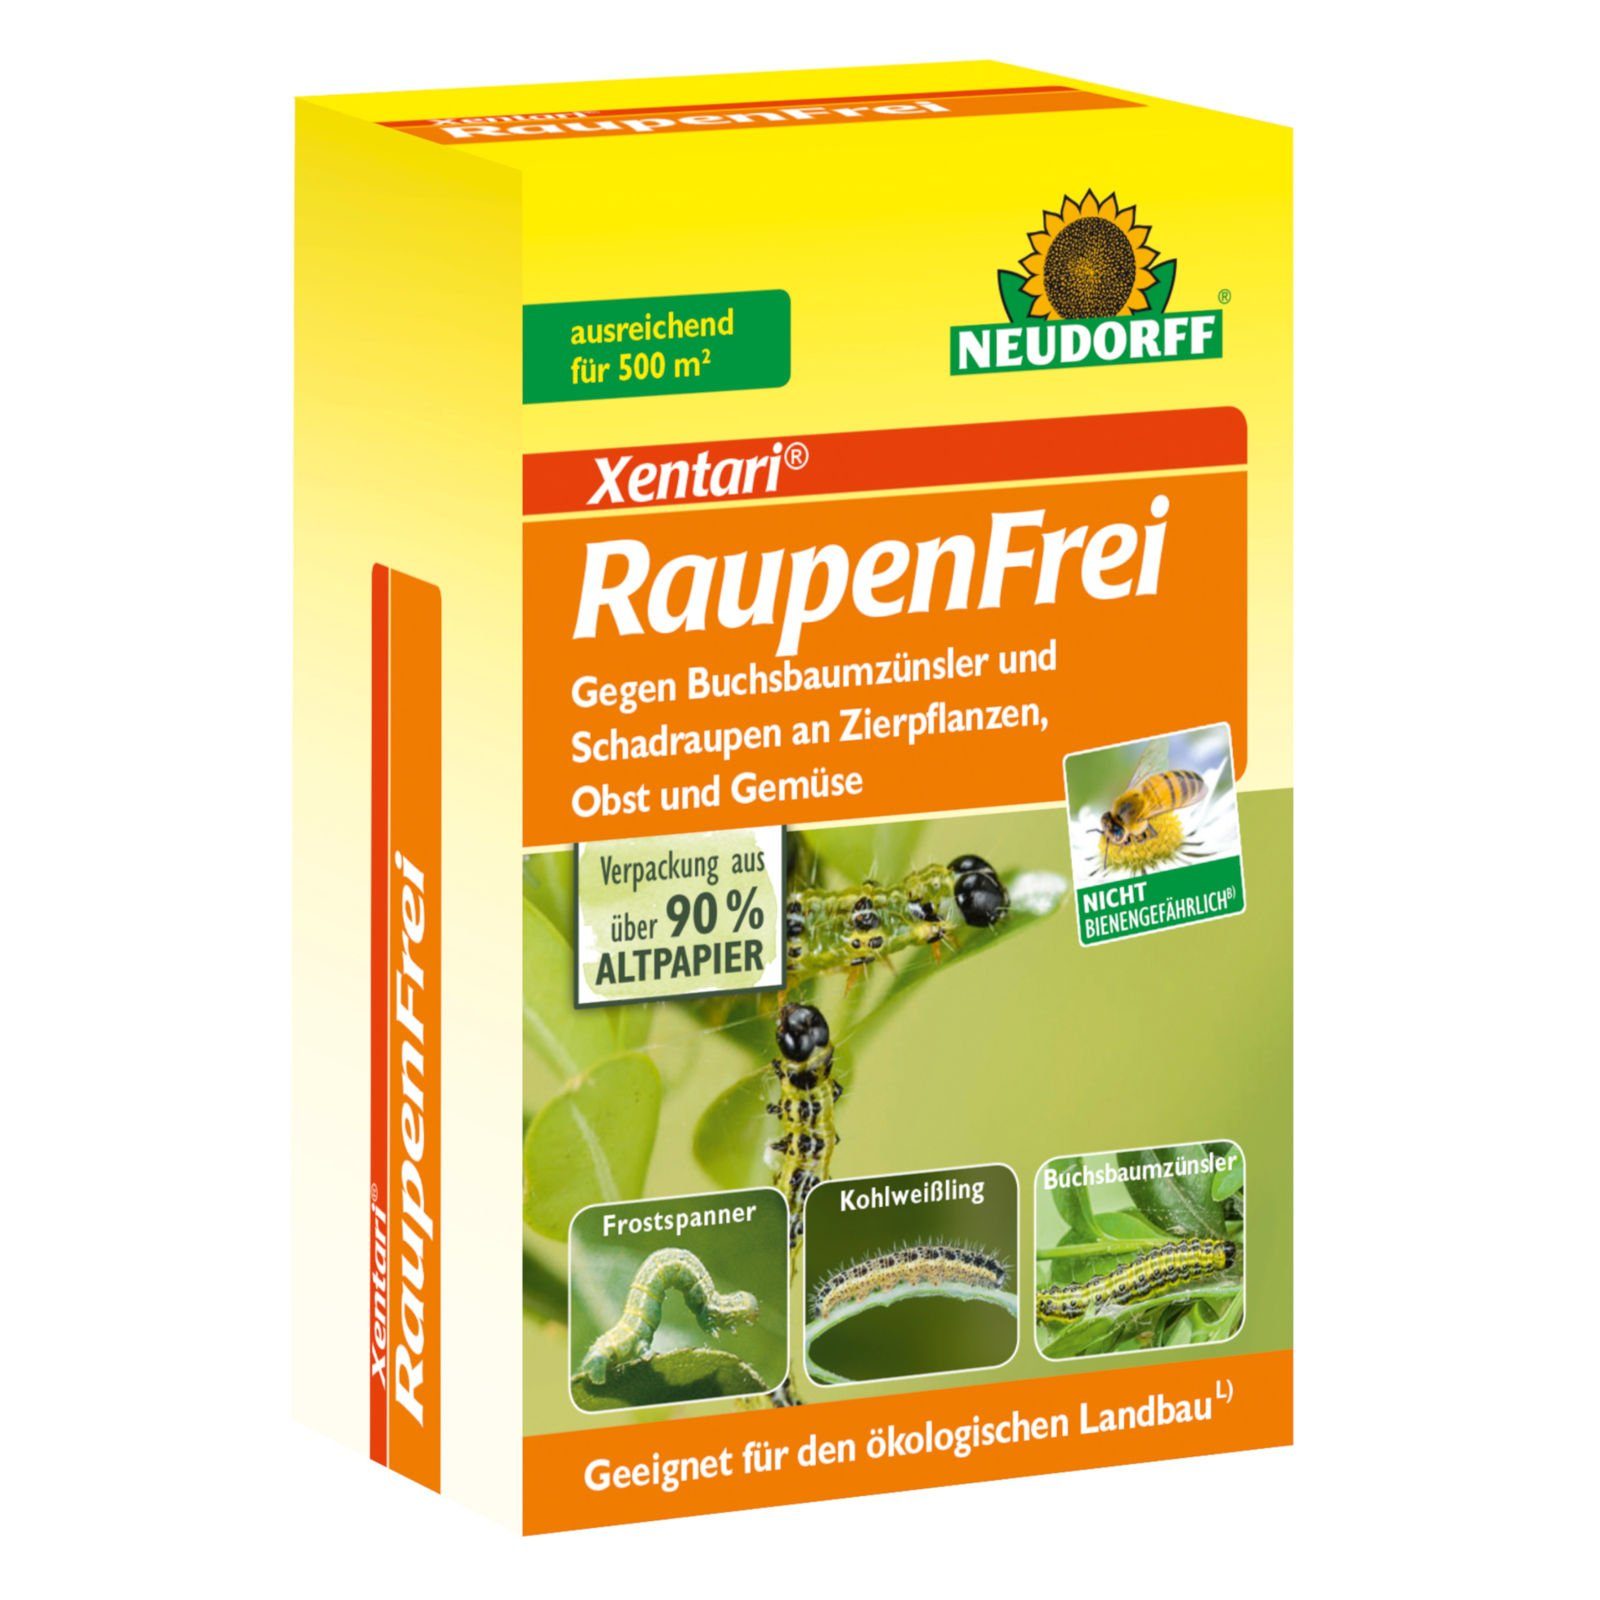 Neudorff Insektenvernichtungsmittel Raupenfrei 25 - 3x XenTari g